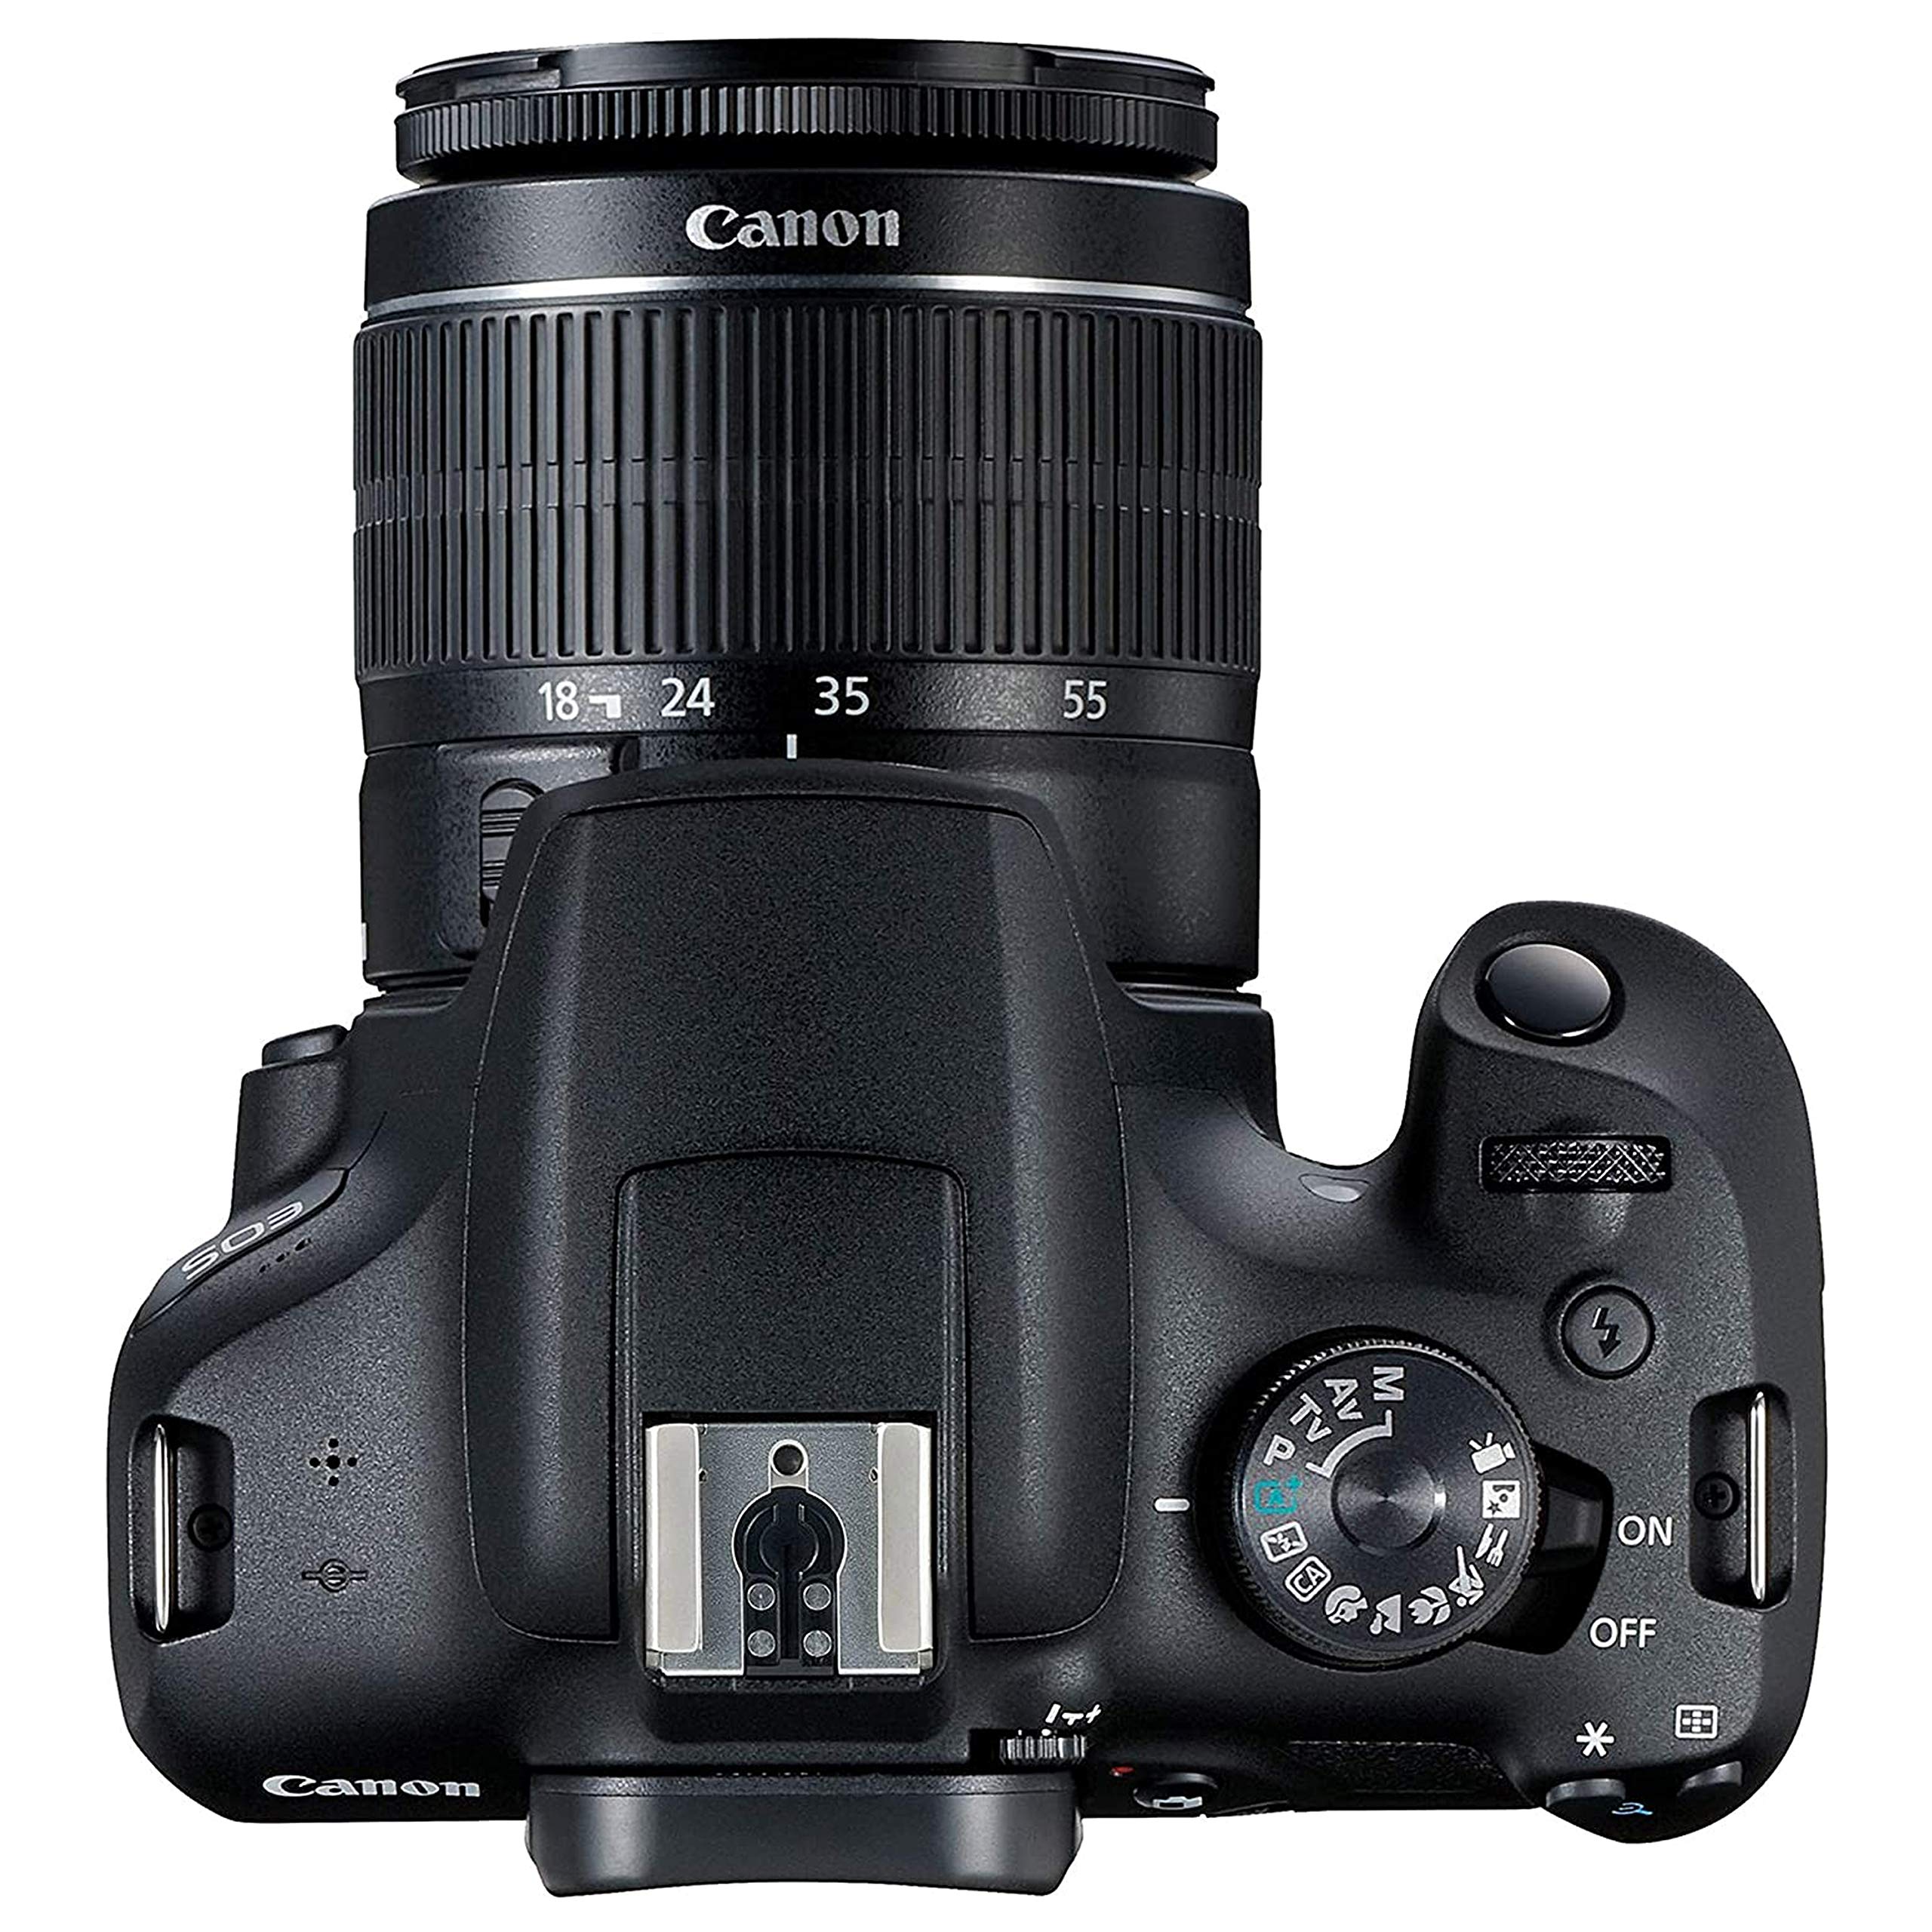 Canon EOS 2000D (Rebel T7) DSLR Camera Bundle with 18-55mm Lens | Built-in Wi-Fi|24.1 MP CMOS Sensor | |DIGIC 4+ Image Processor and Full HD Videos + 64GB Memory(17pcs)